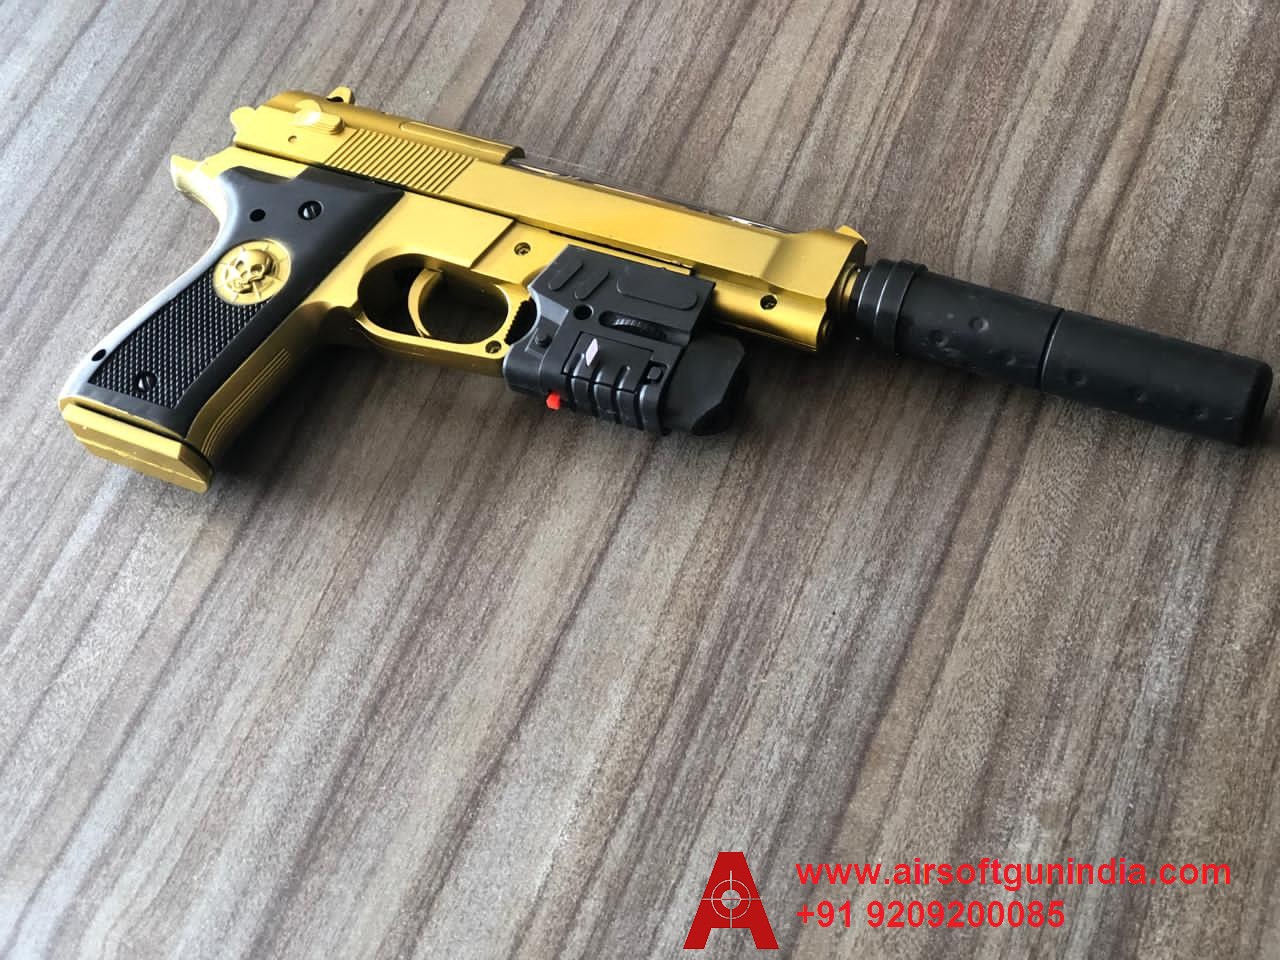 Aladdin Golden Airsoft Pistol By Airsoft Gun India Airsoft Gun India